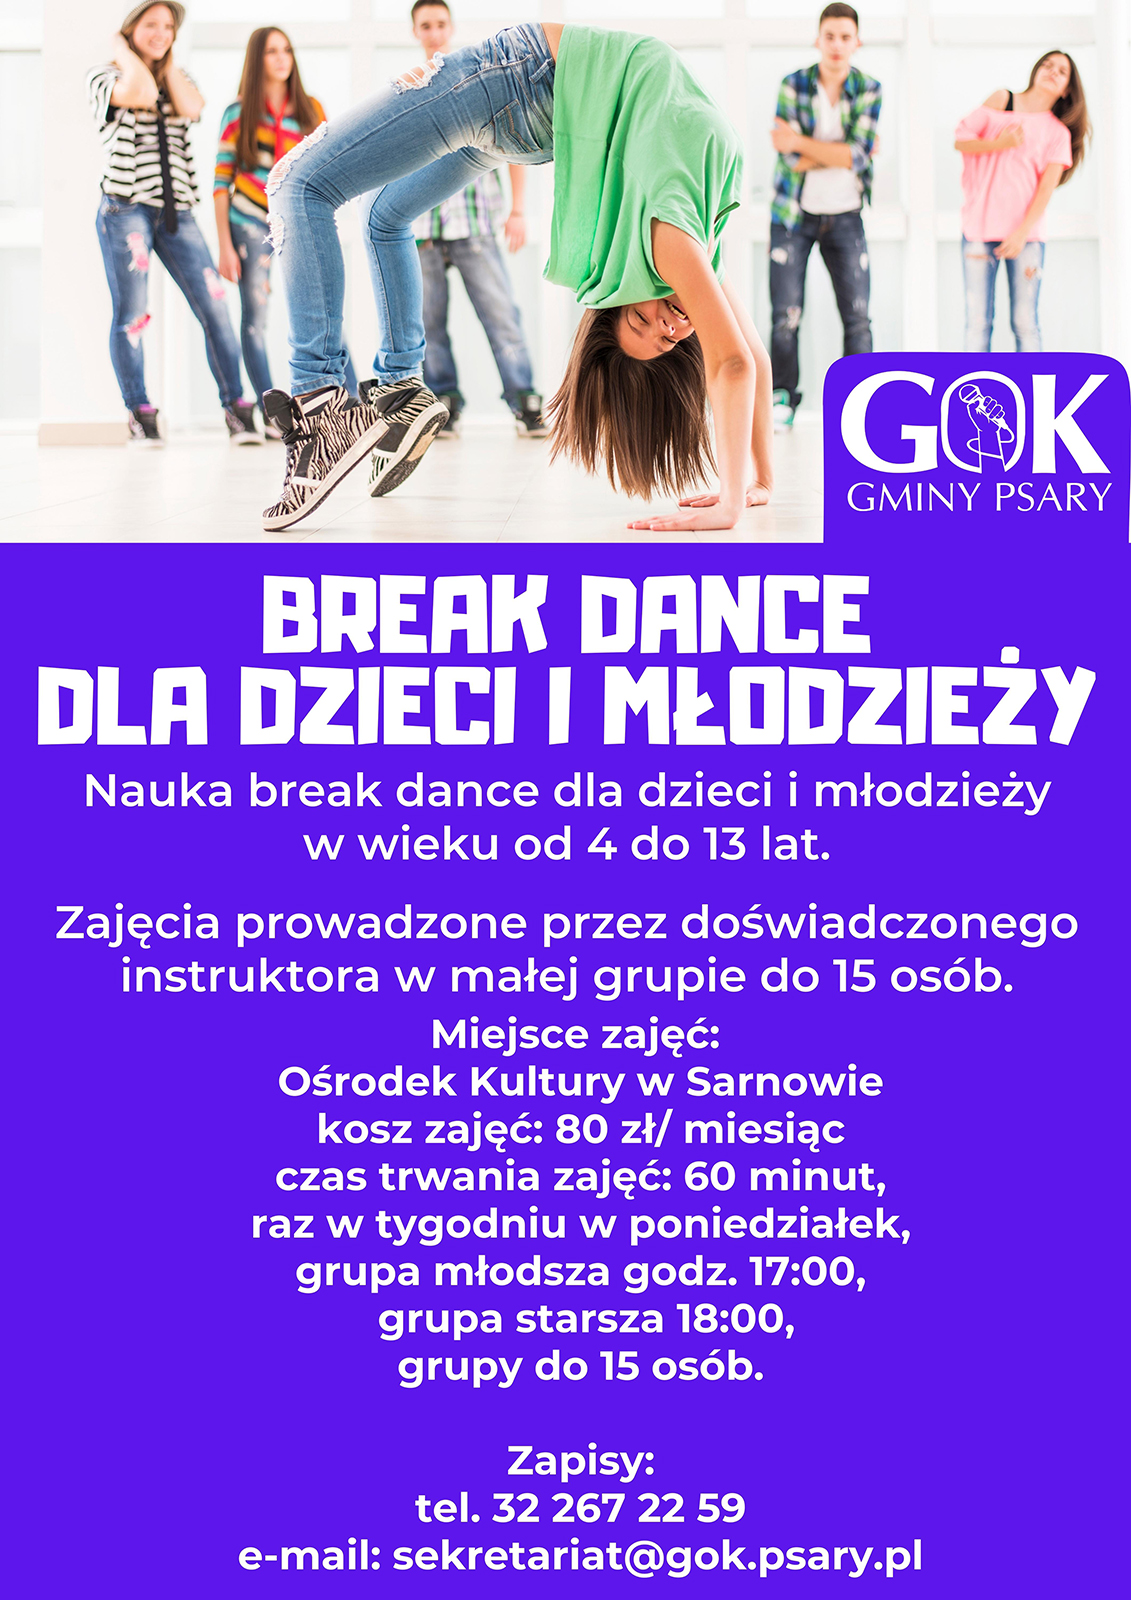 Break dance plakat SM